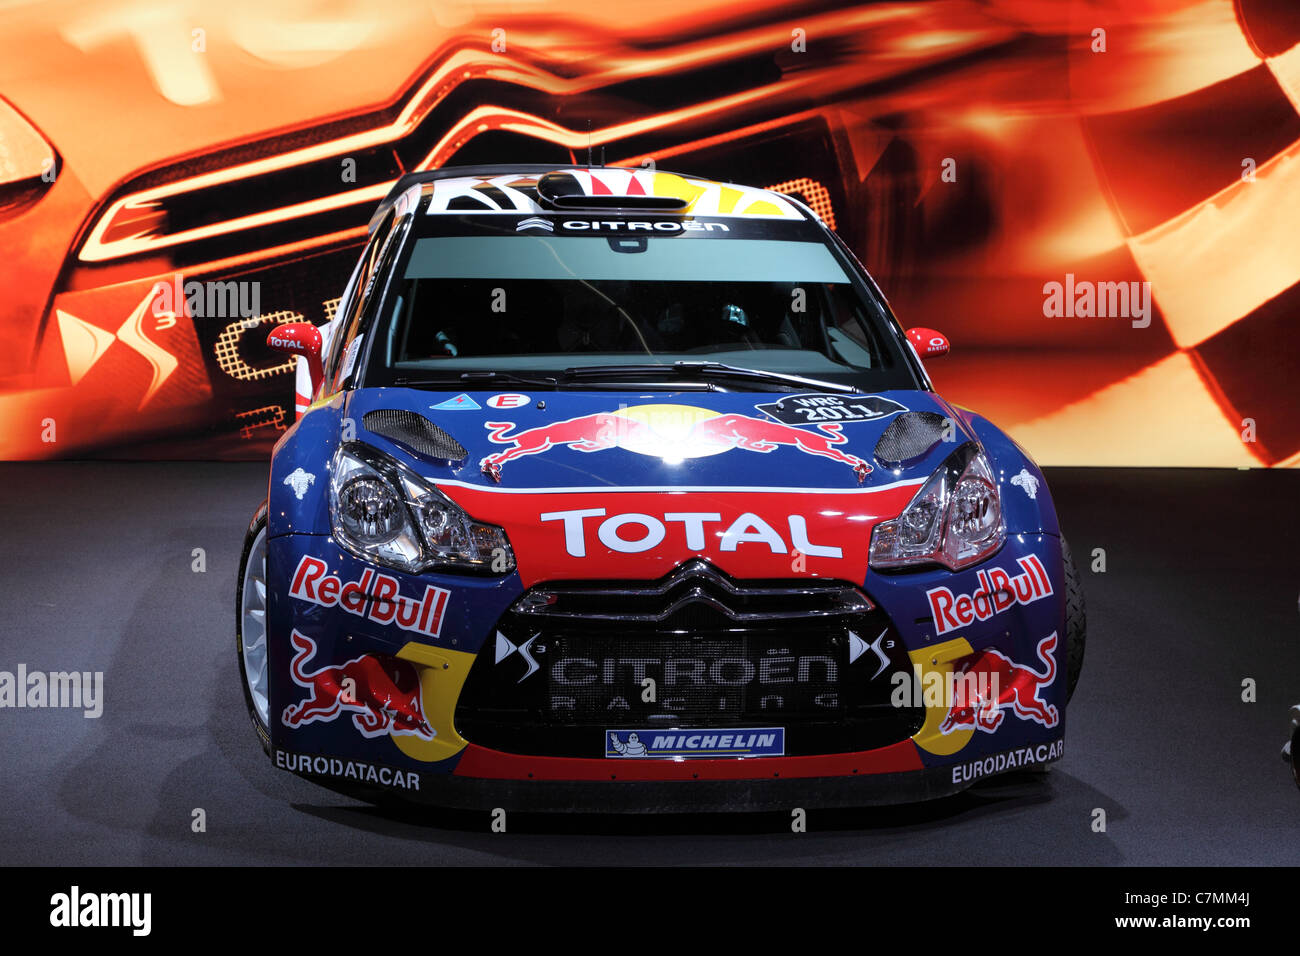 La Citroen DS3 WRC Rally Car Racing al sessantaquattresimo IAA (Internationale Automobil Ausstellung) Foto Stock